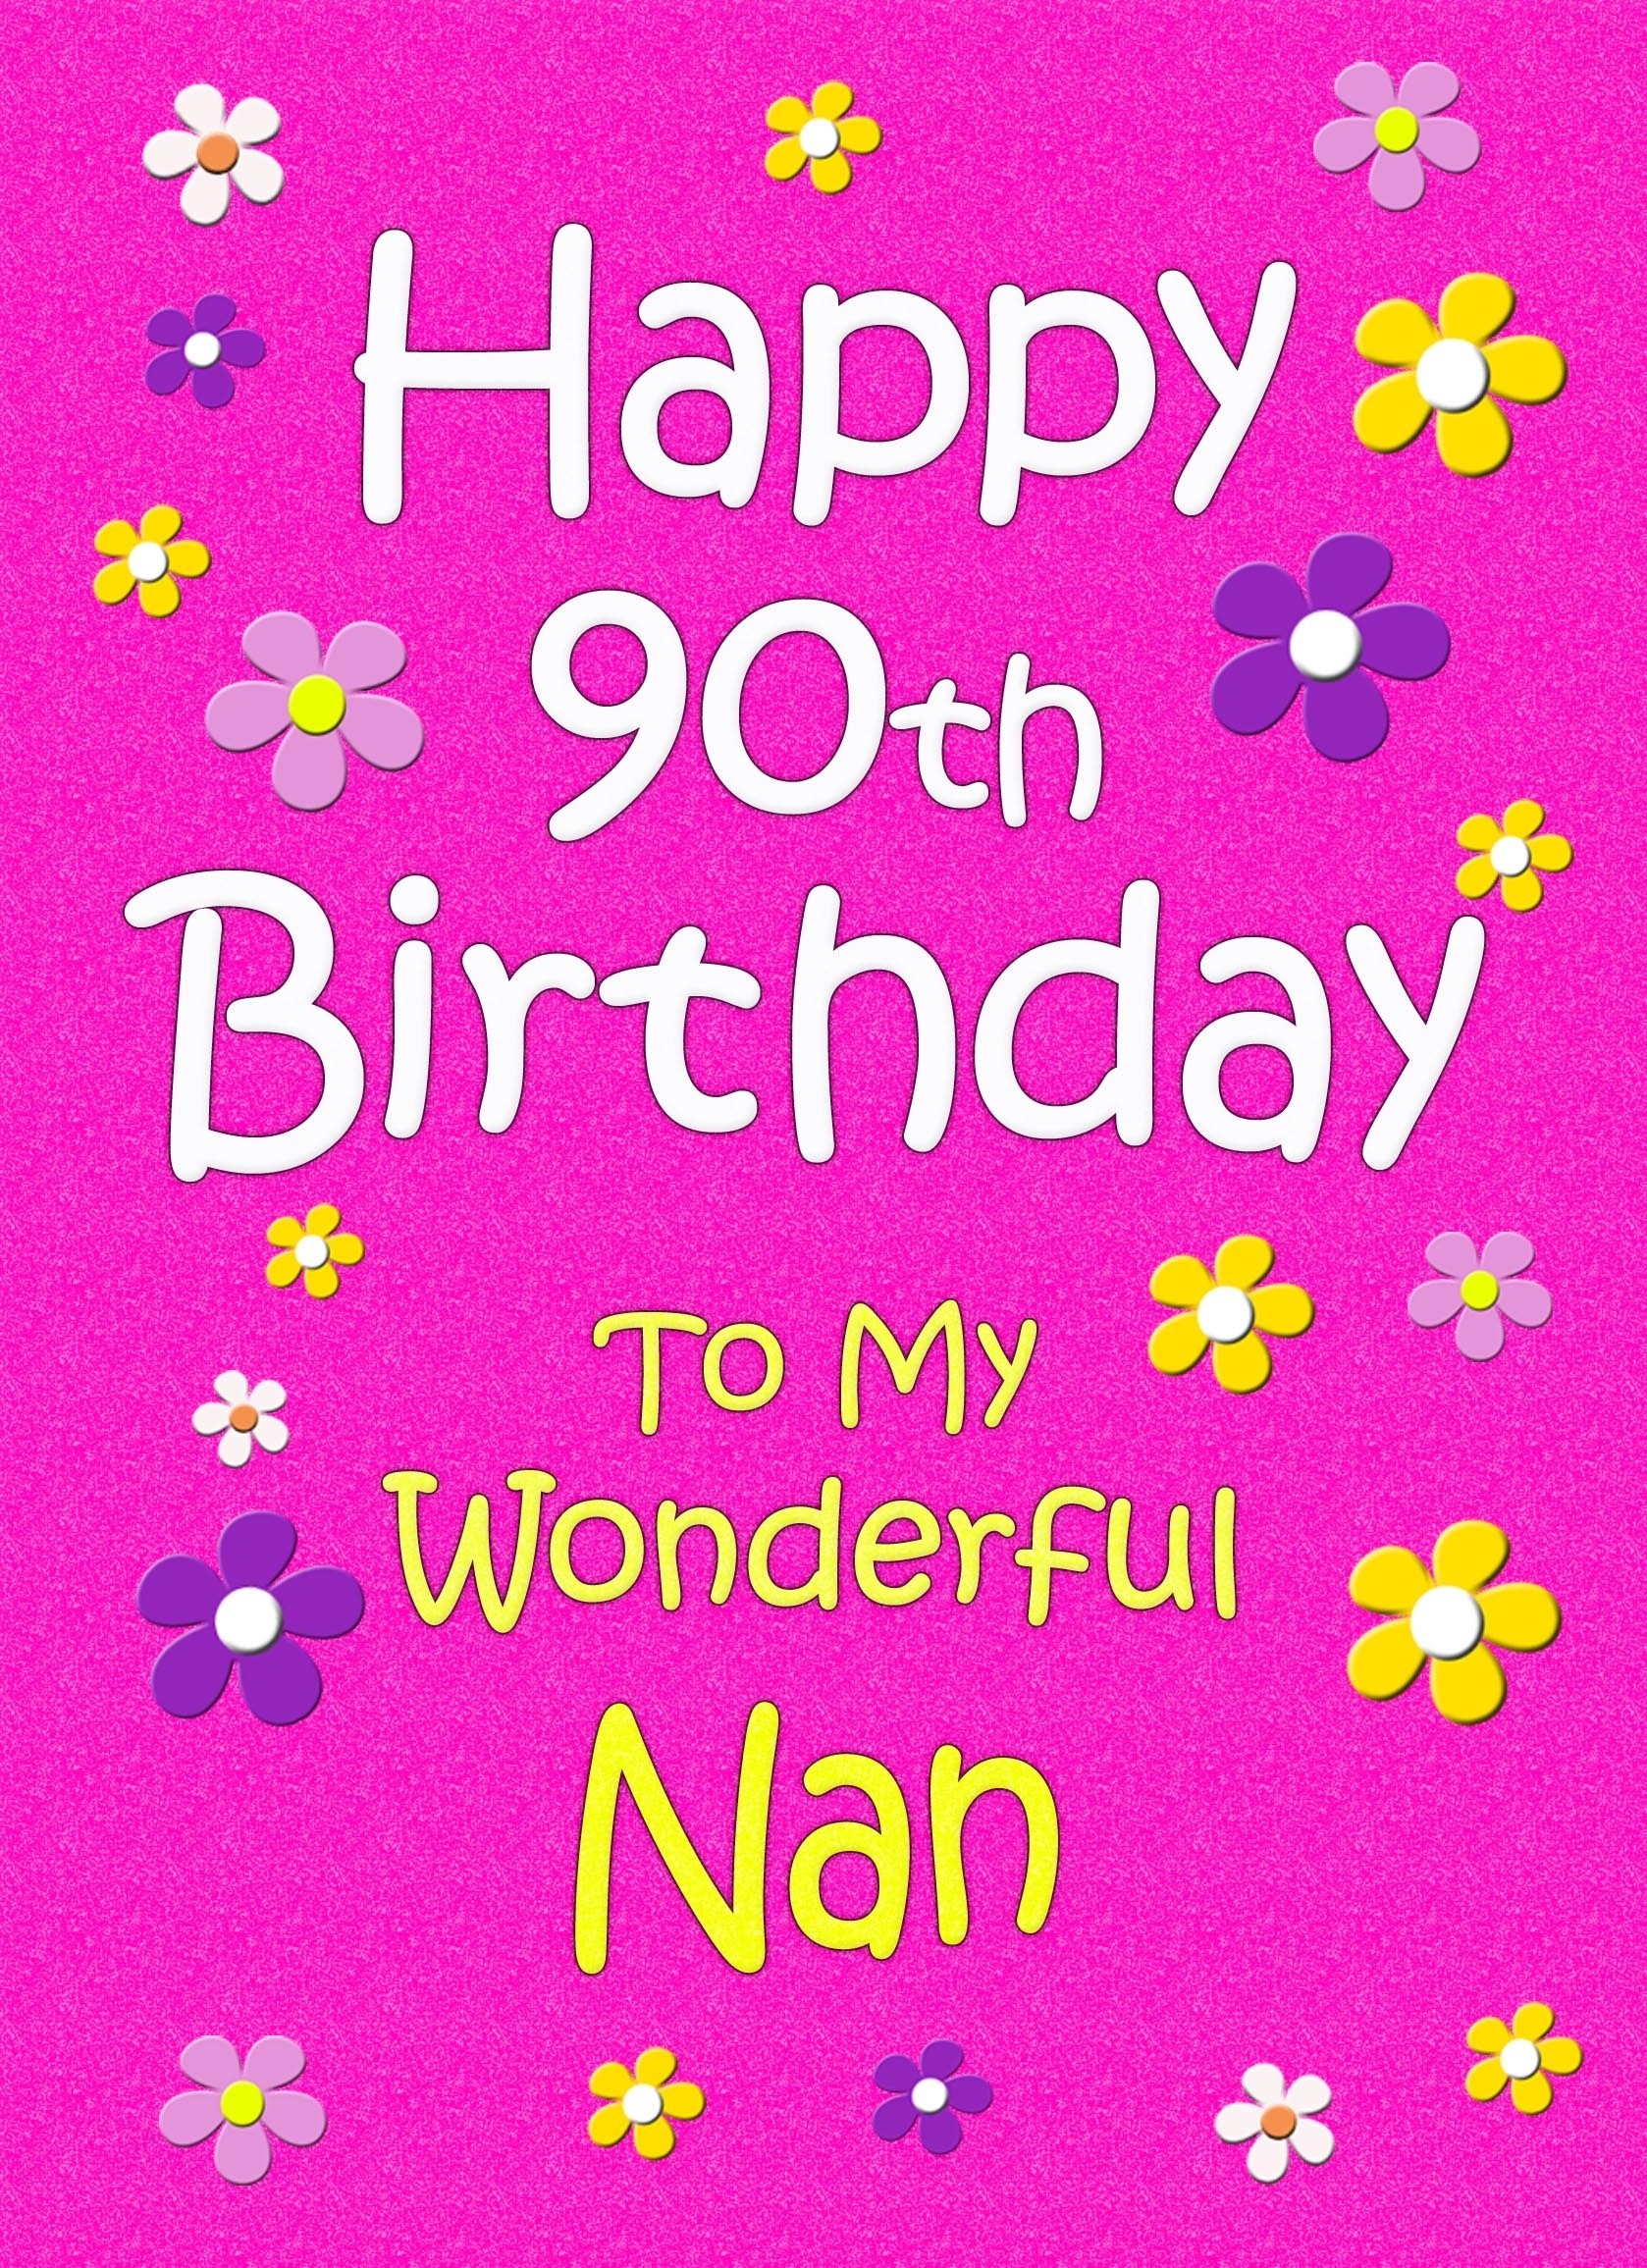 Nan 90th Birthday Card (Pink)